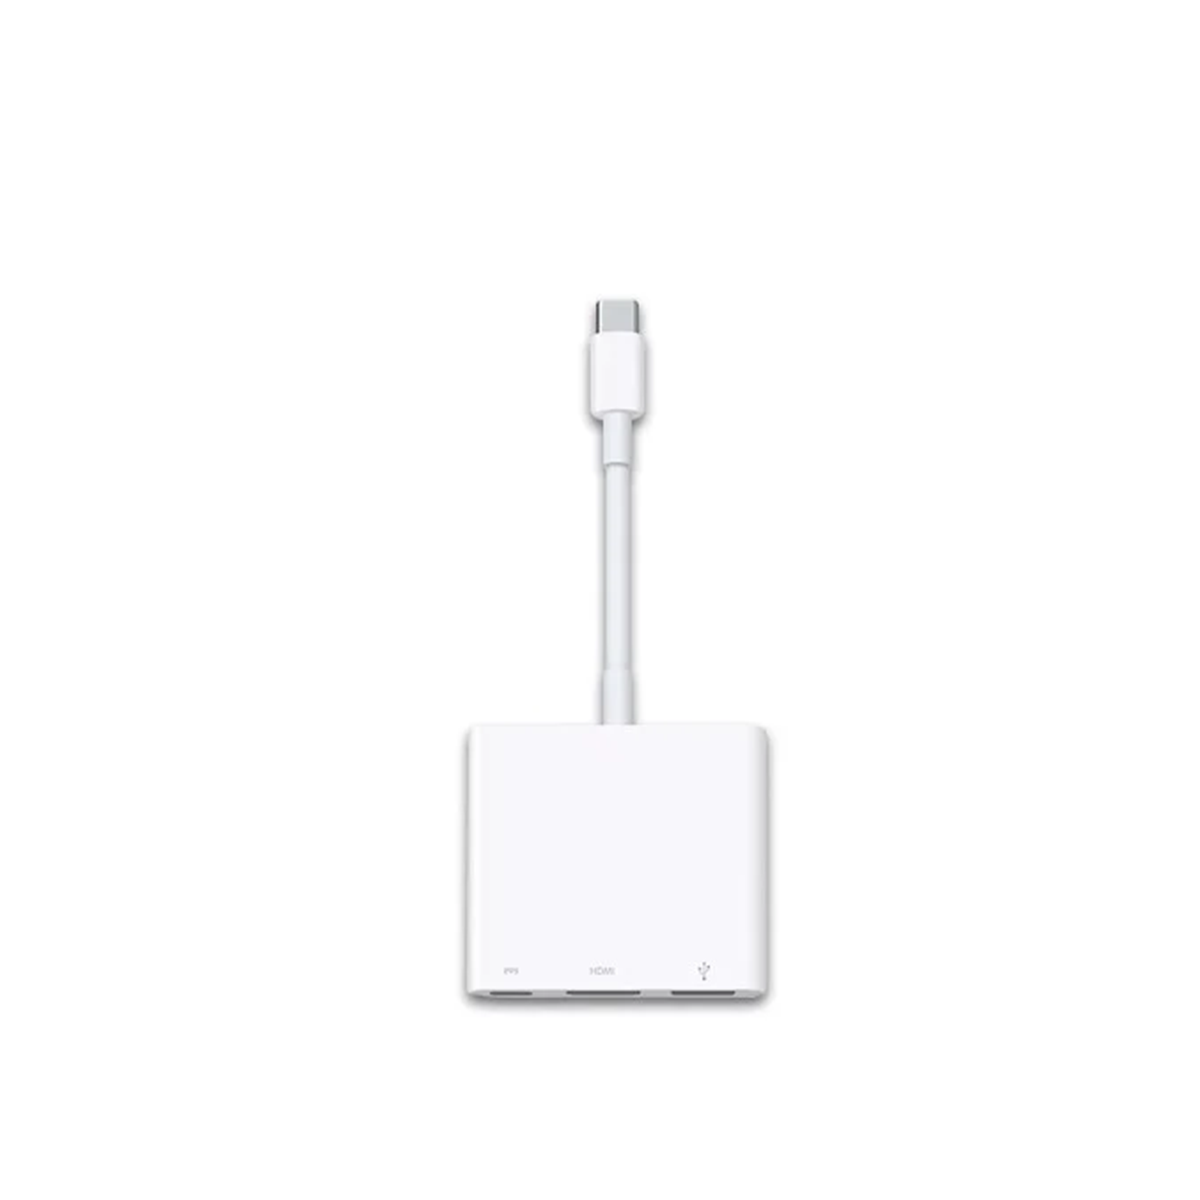  Adapter chuyển đổi Type C sang HDMI/Type C/USB Apple MUF82 White 